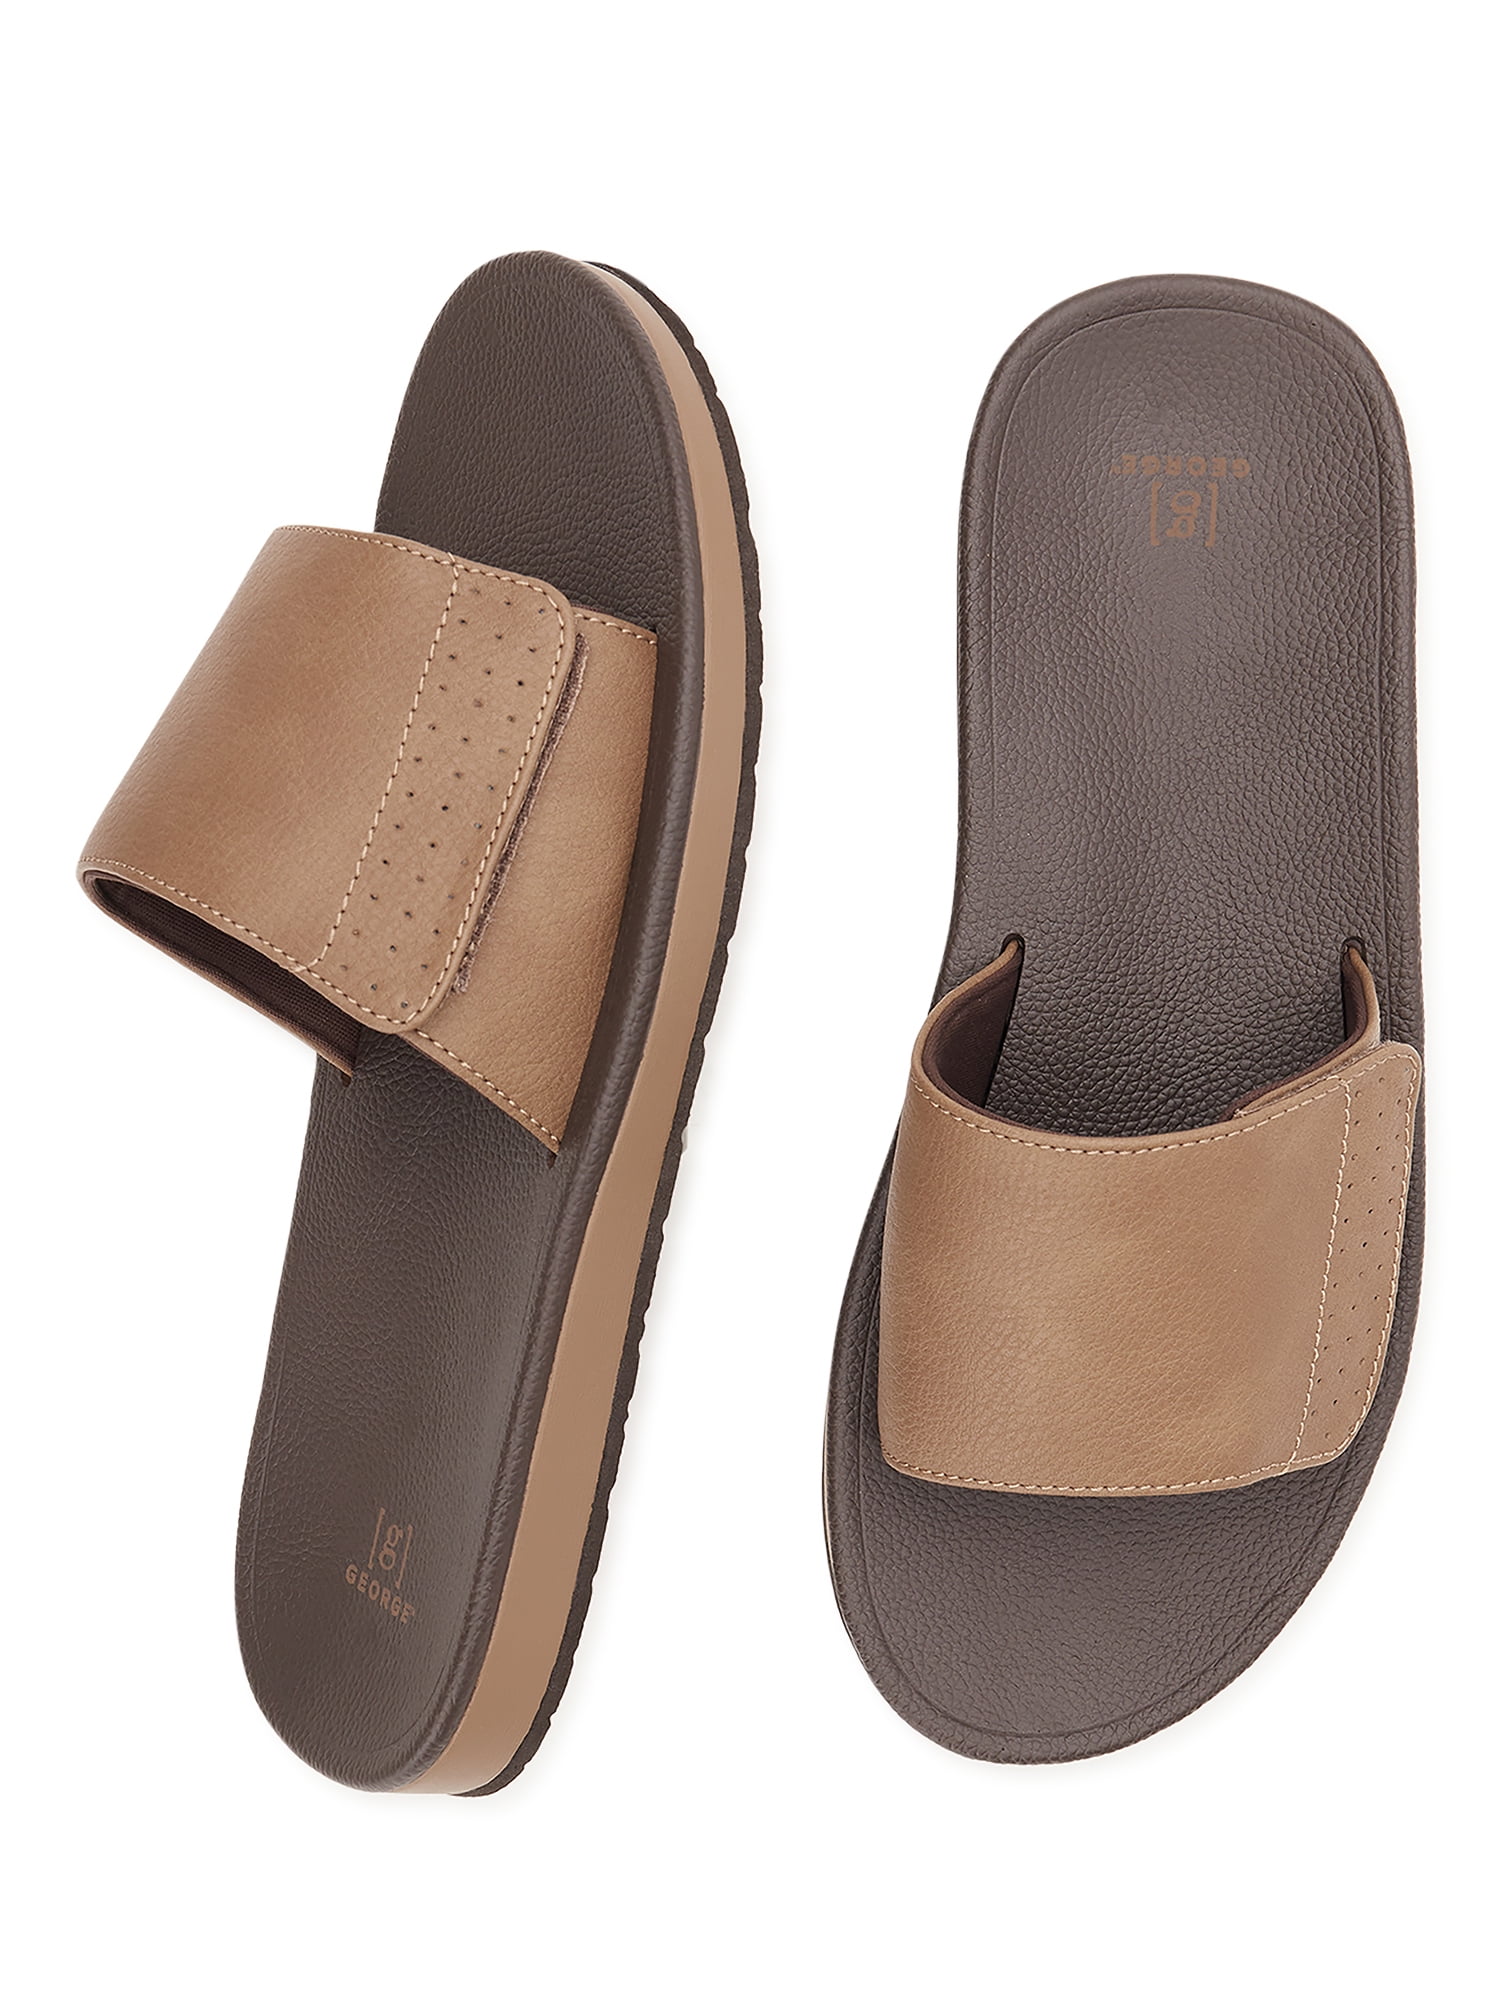 George Men's Comfort Slide Sandals